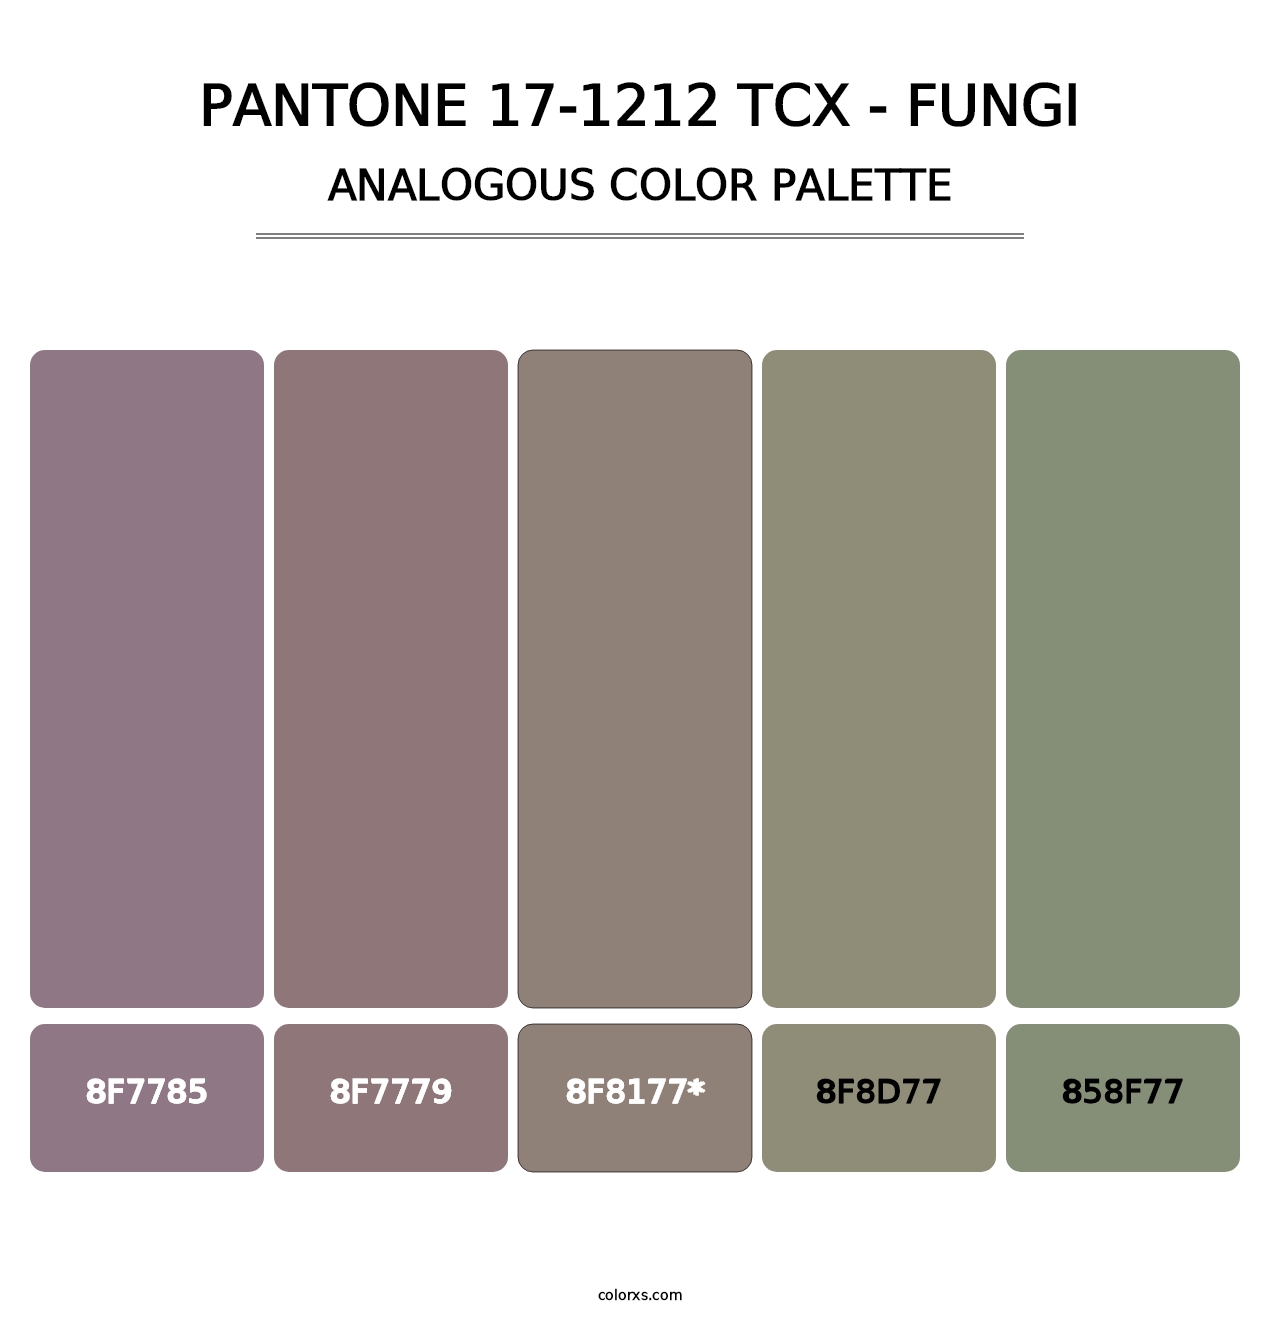 PANTONE 17-1212 TCX - Fungi - Analogous Color Palette